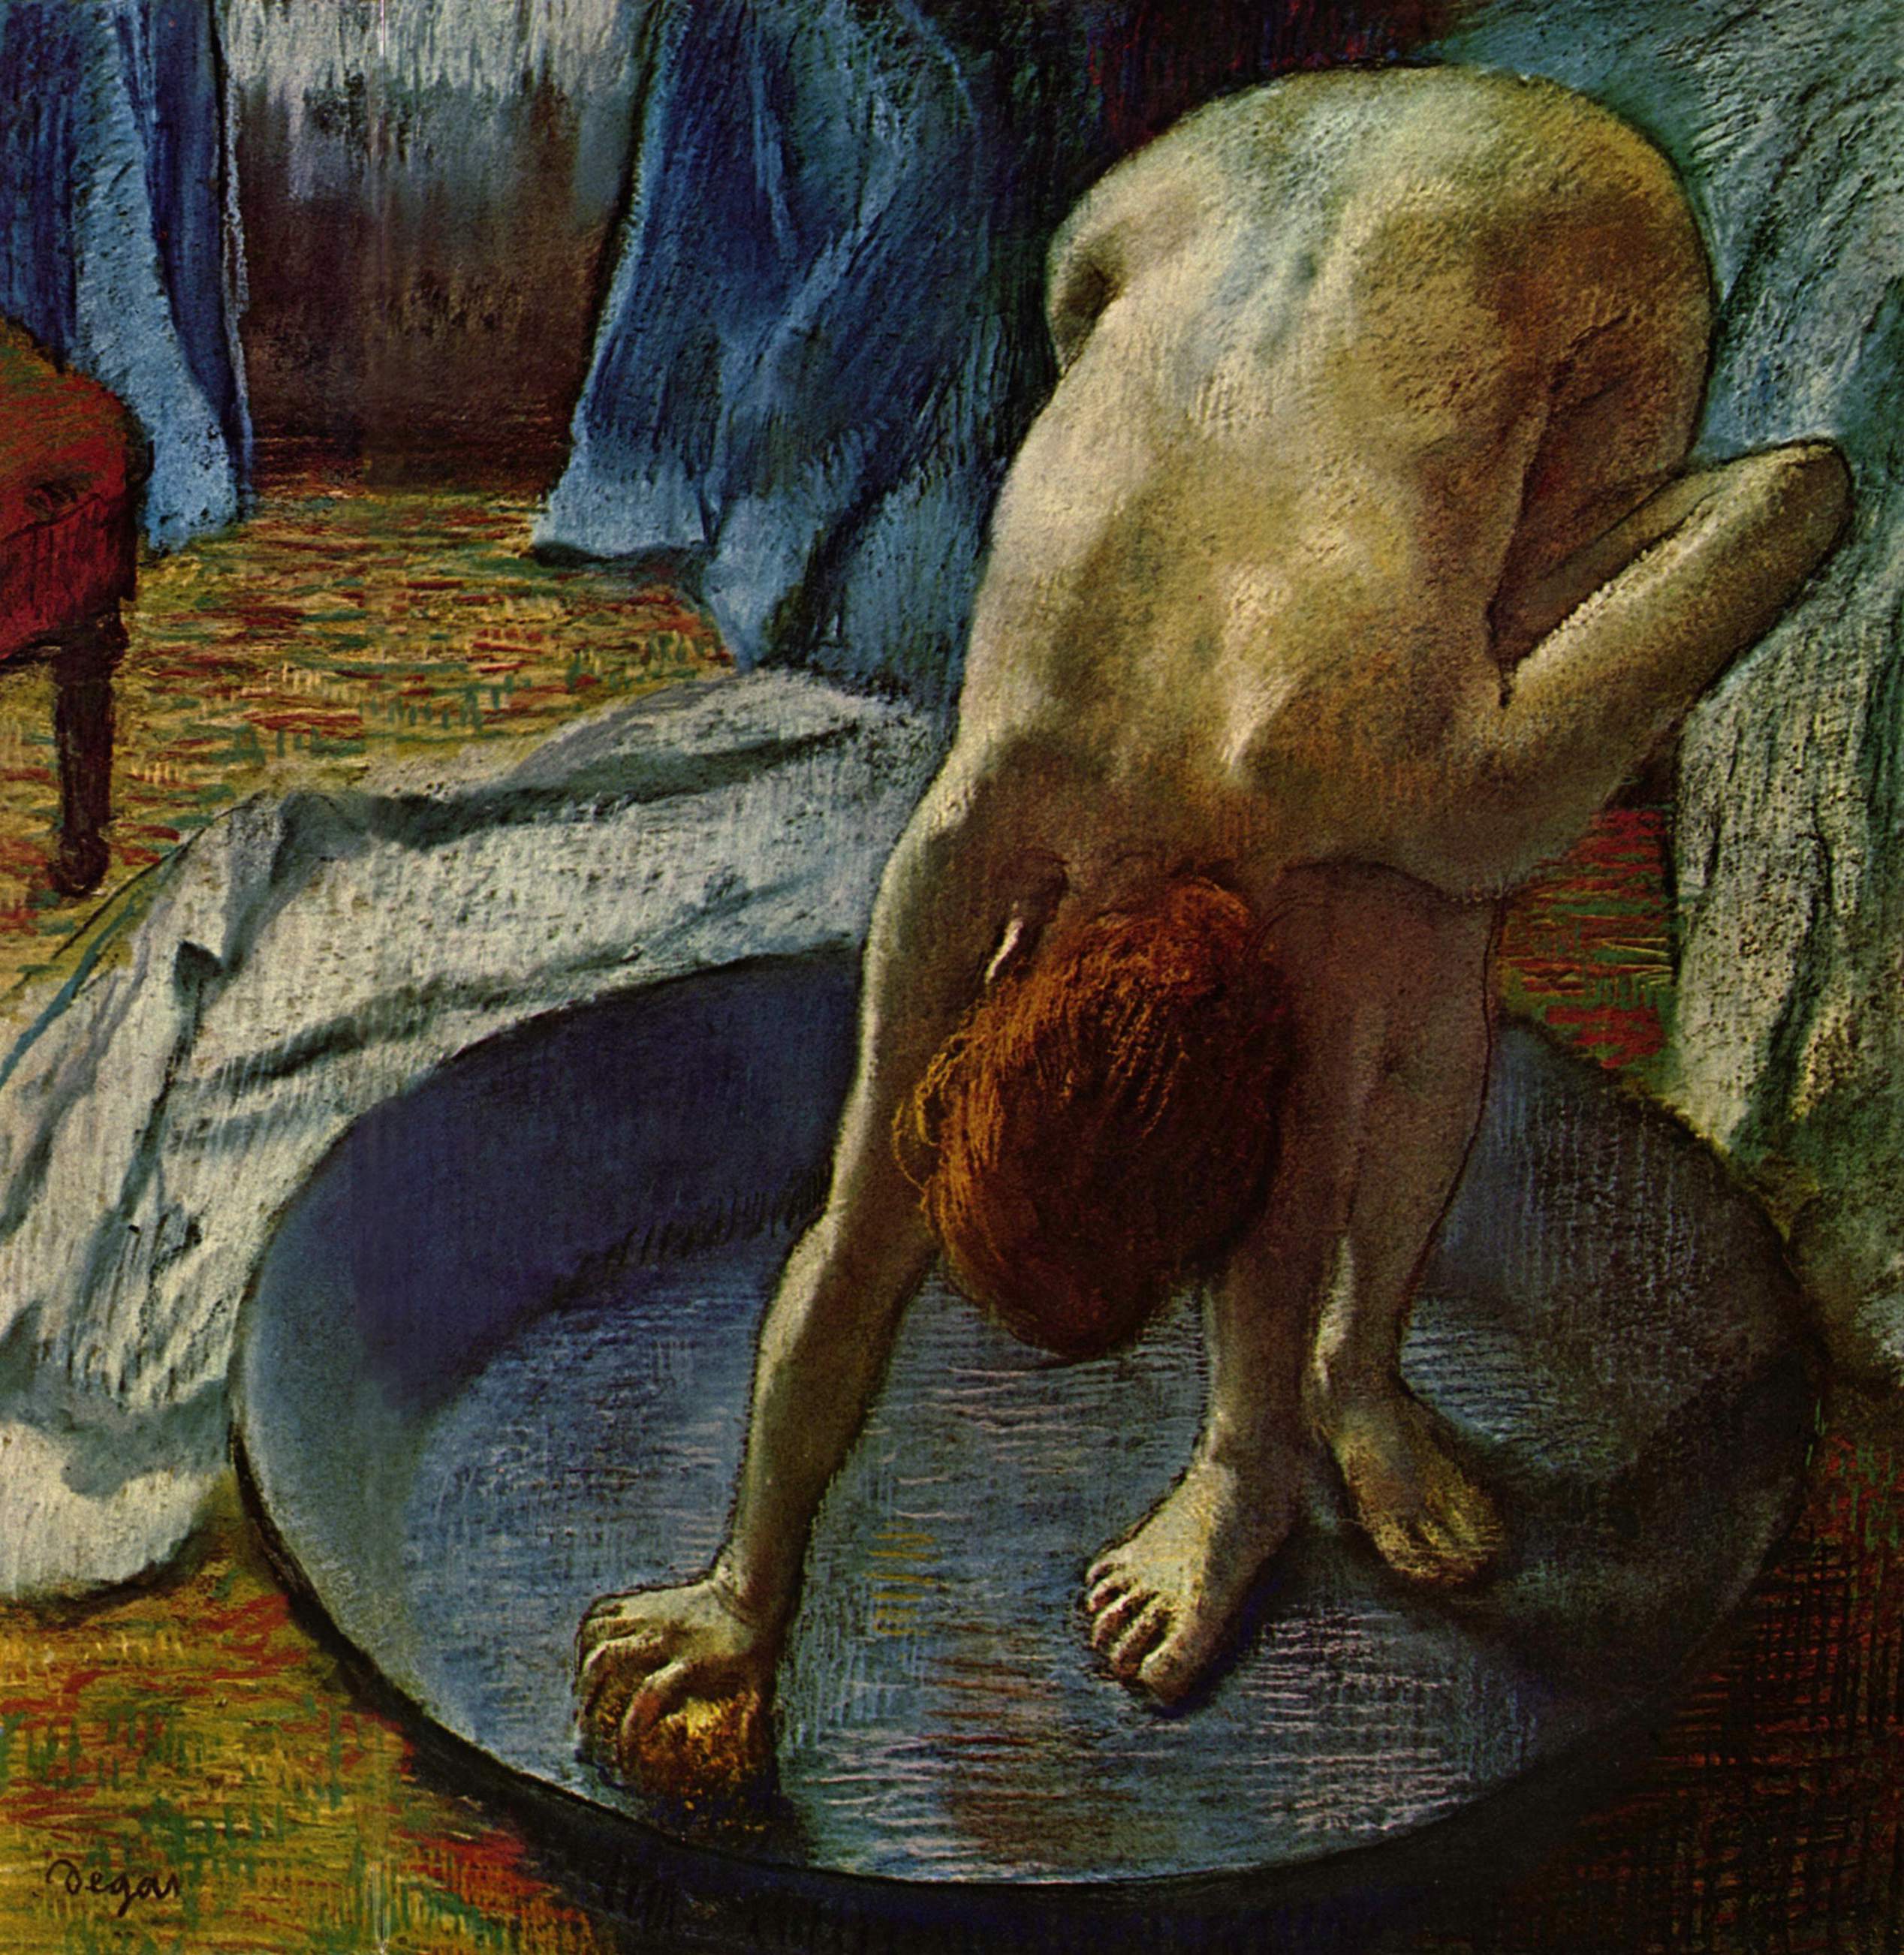 Femme au tub by Edgar Degas - 1886 - 69.9 x 69.9 cm Hill-Stead Museum